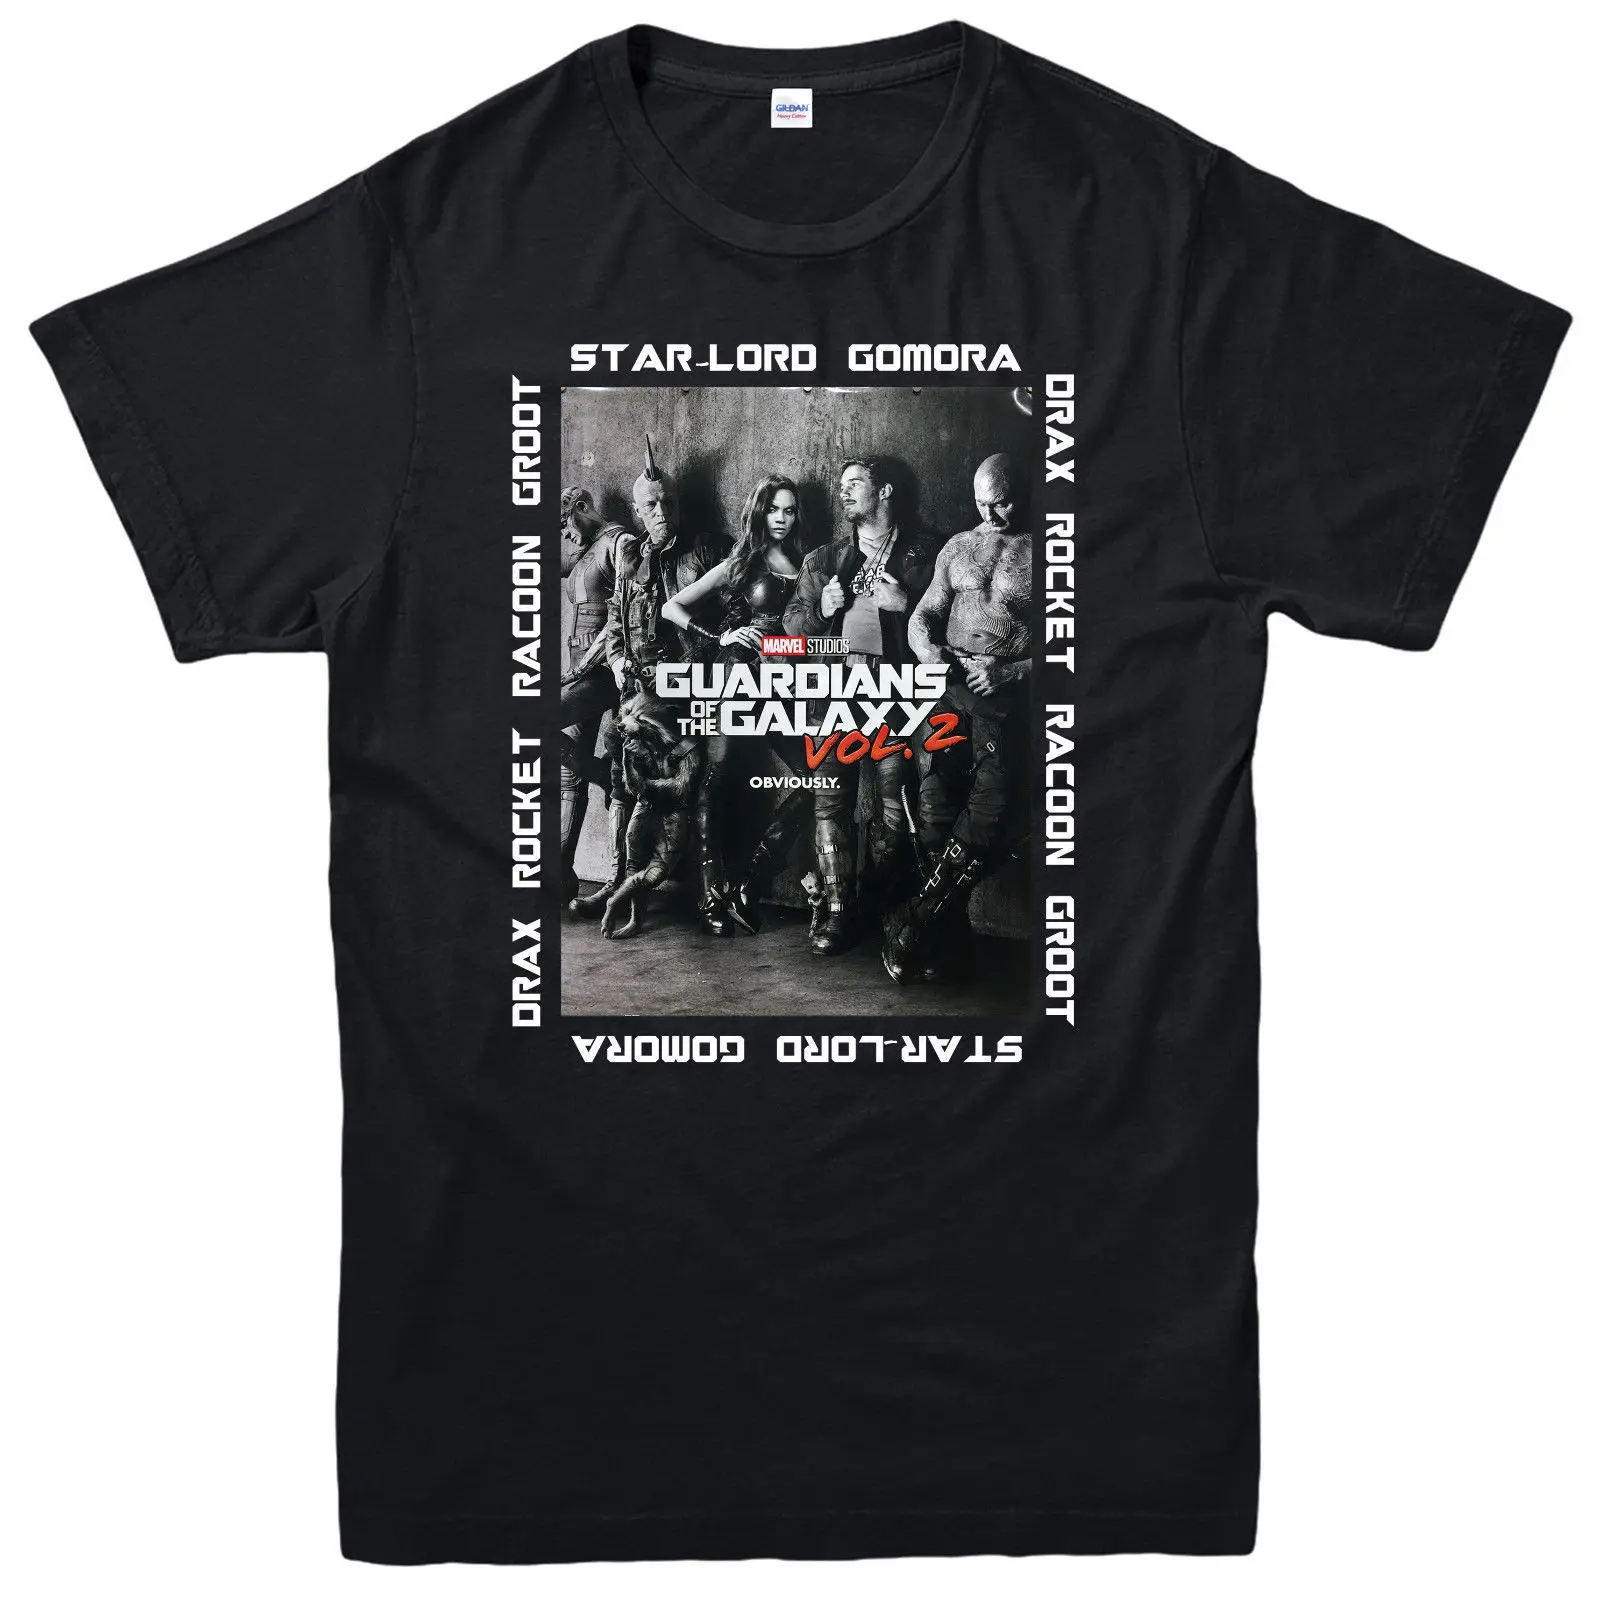 Футболка стражи Галактики подарок футболка для взрослых Gamora Drax Star Lord Футболки